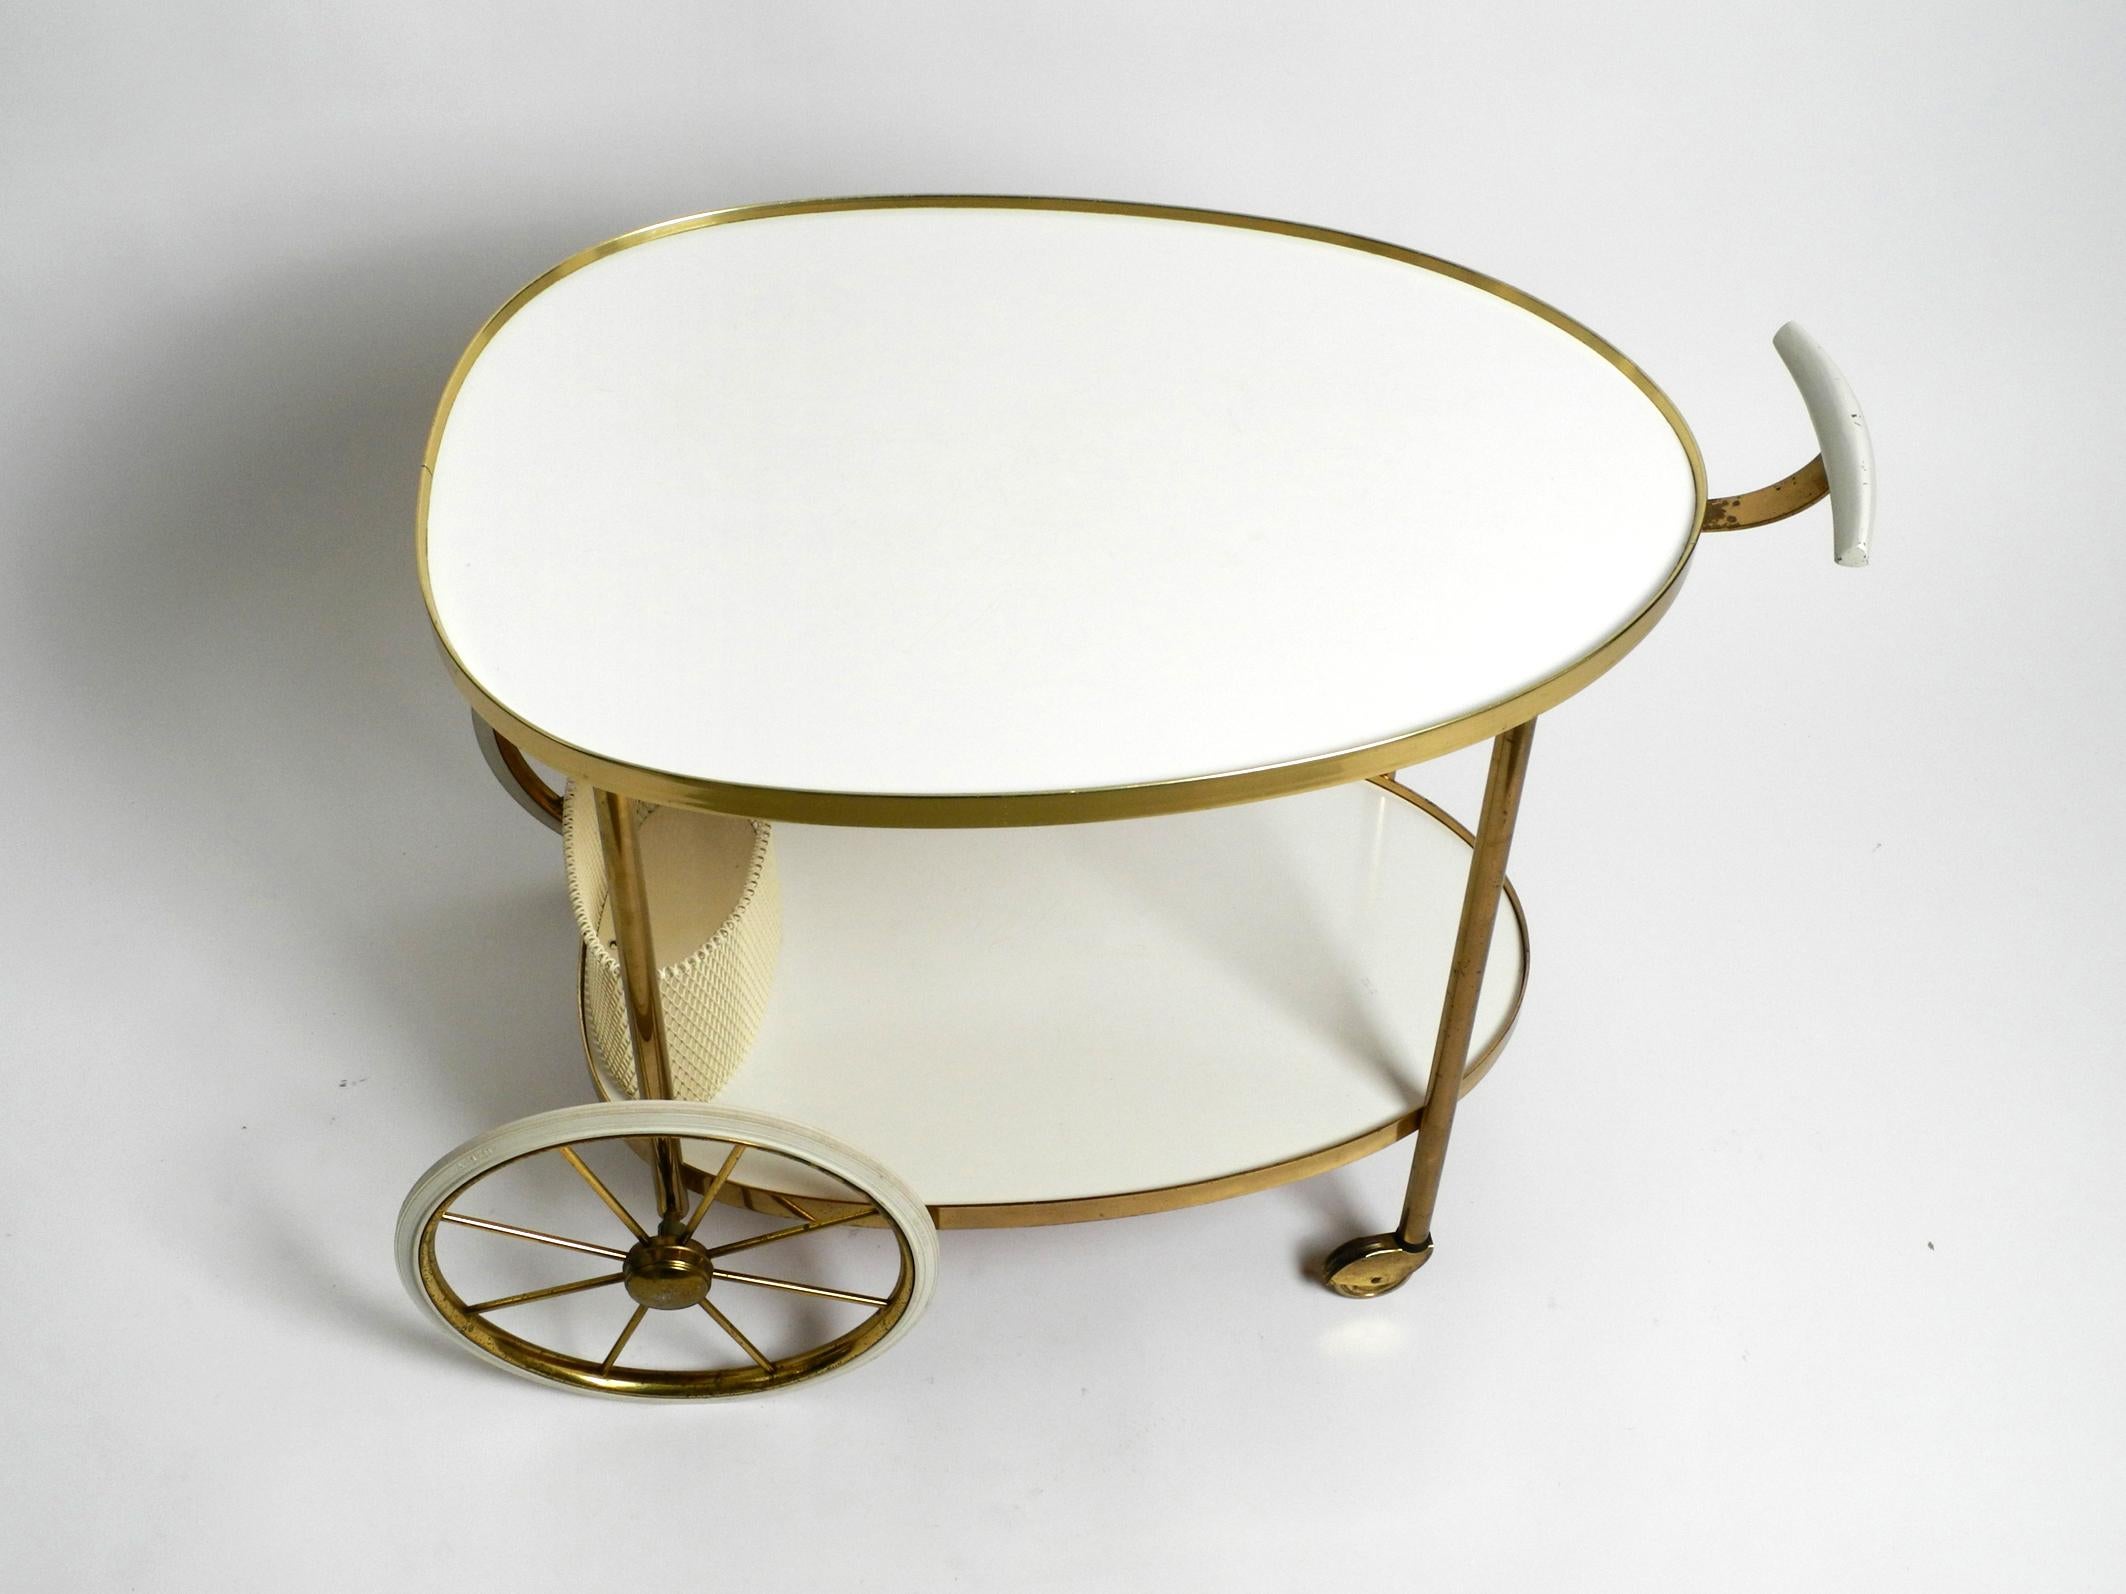 German Mid Century brass and wood serving trolley or bar cart by Vereinigte Werkstätten For Sale